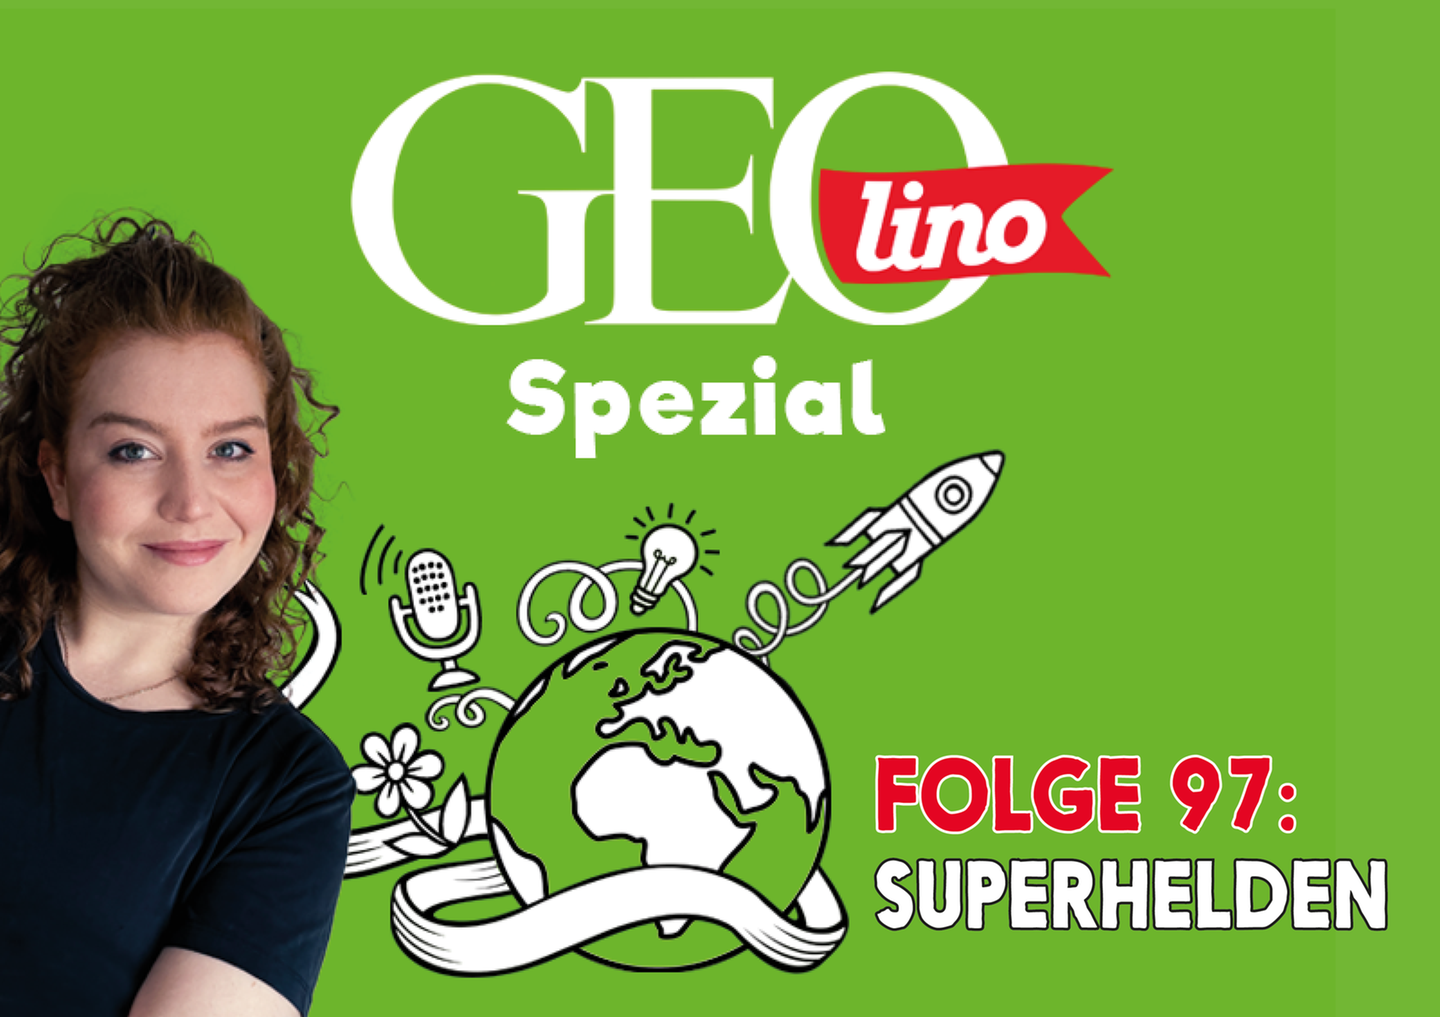 In Folge 97 unseres GEOlino-Podcasts geht es um Superhelden!